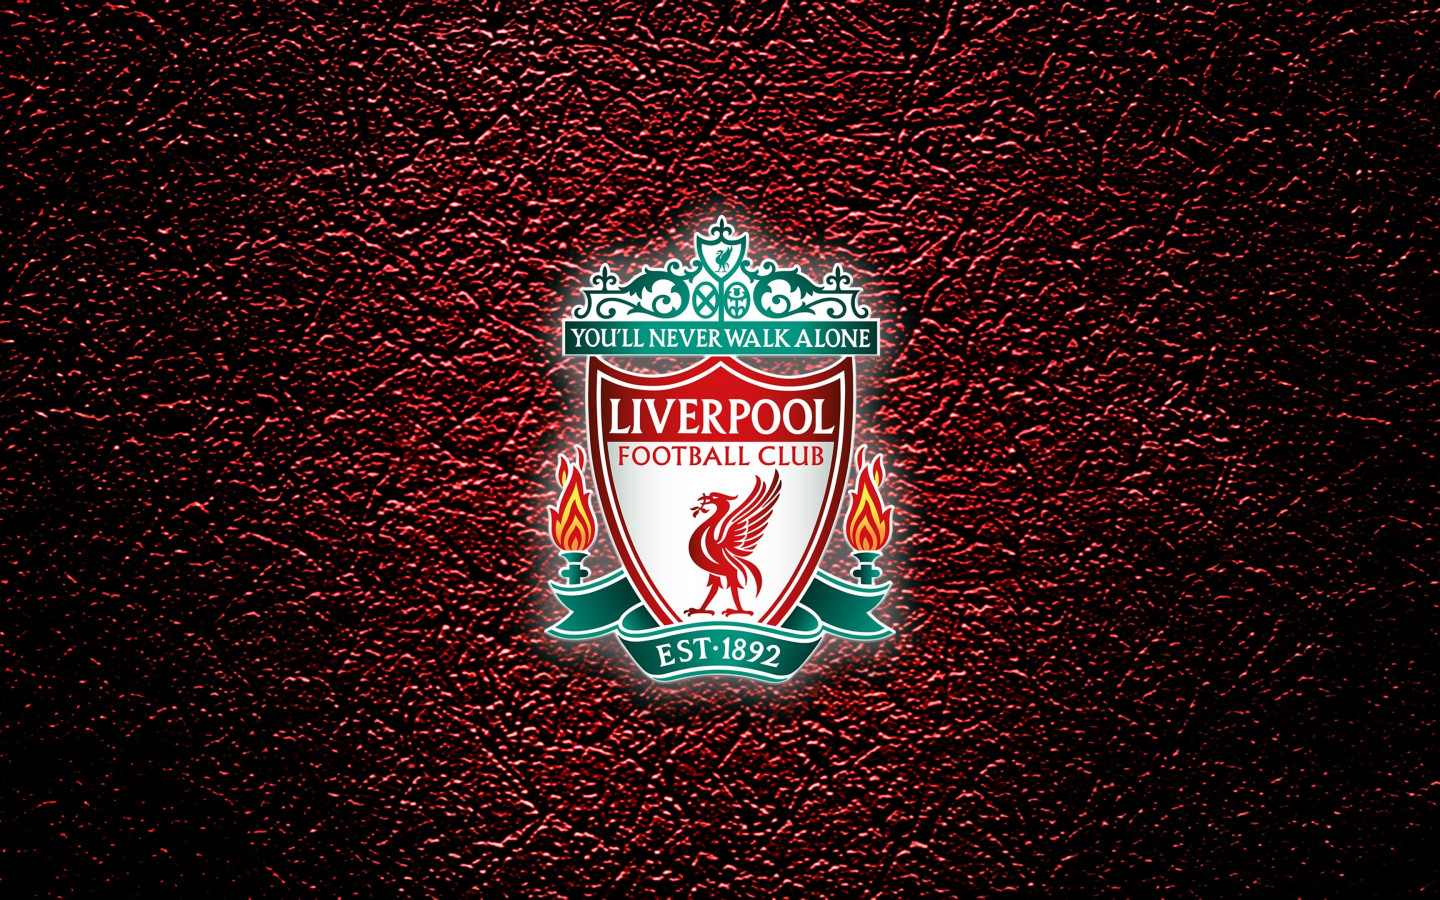 Liverpool - You'll never walk alone wallpaper 1440x900